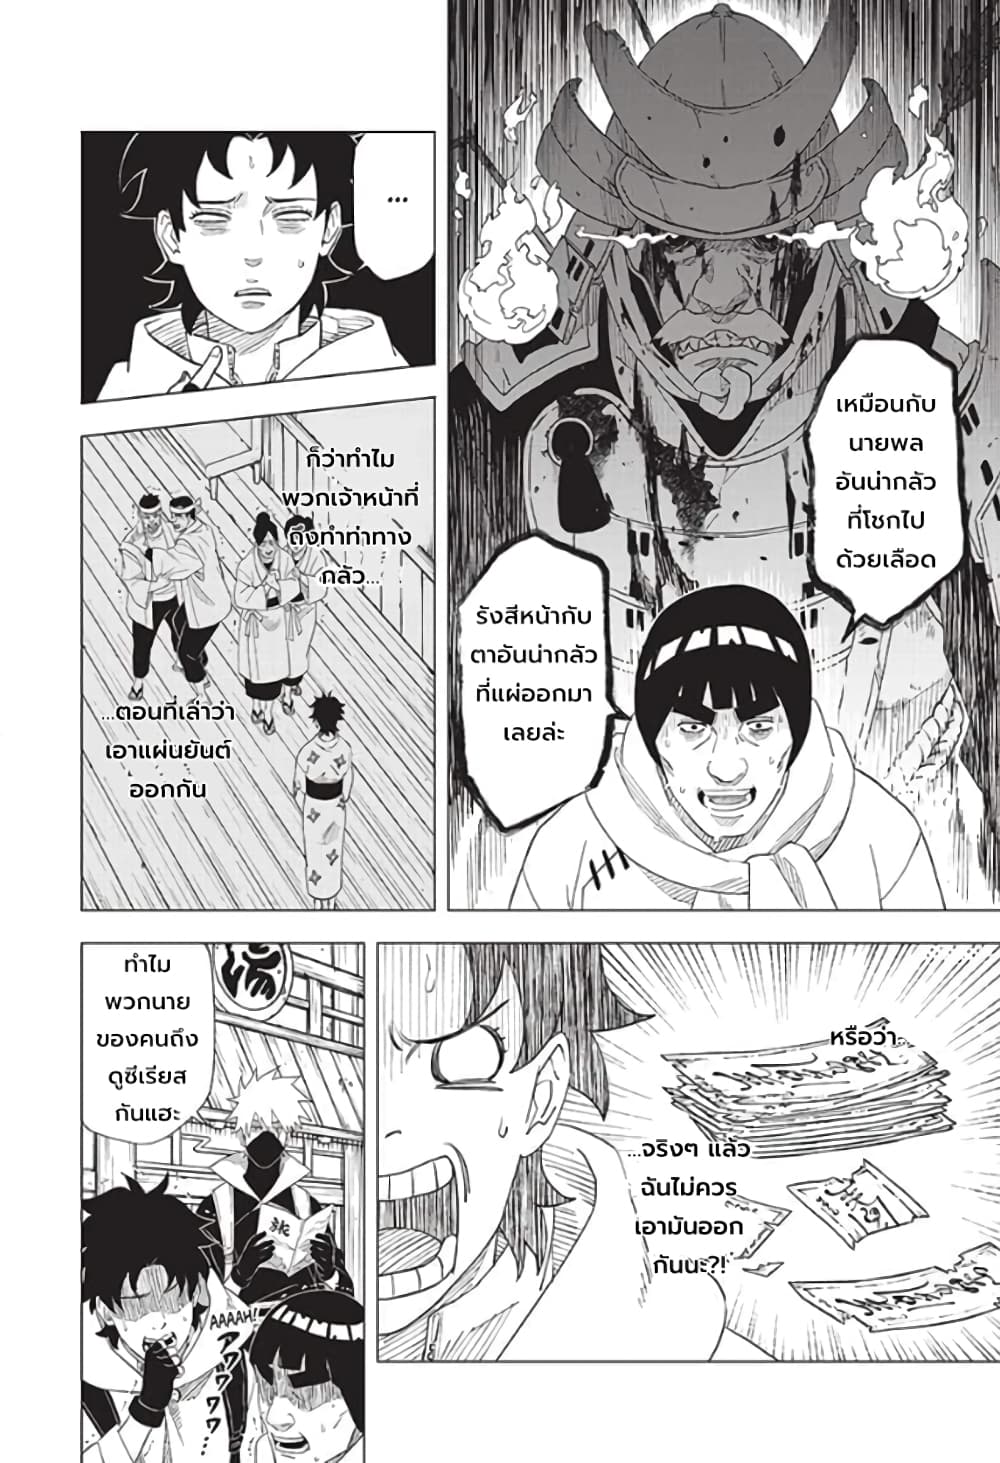 Naruto Konoha’s Story – The Steam Ninja Scrolls The Manga ตอนที่ 8 (18)